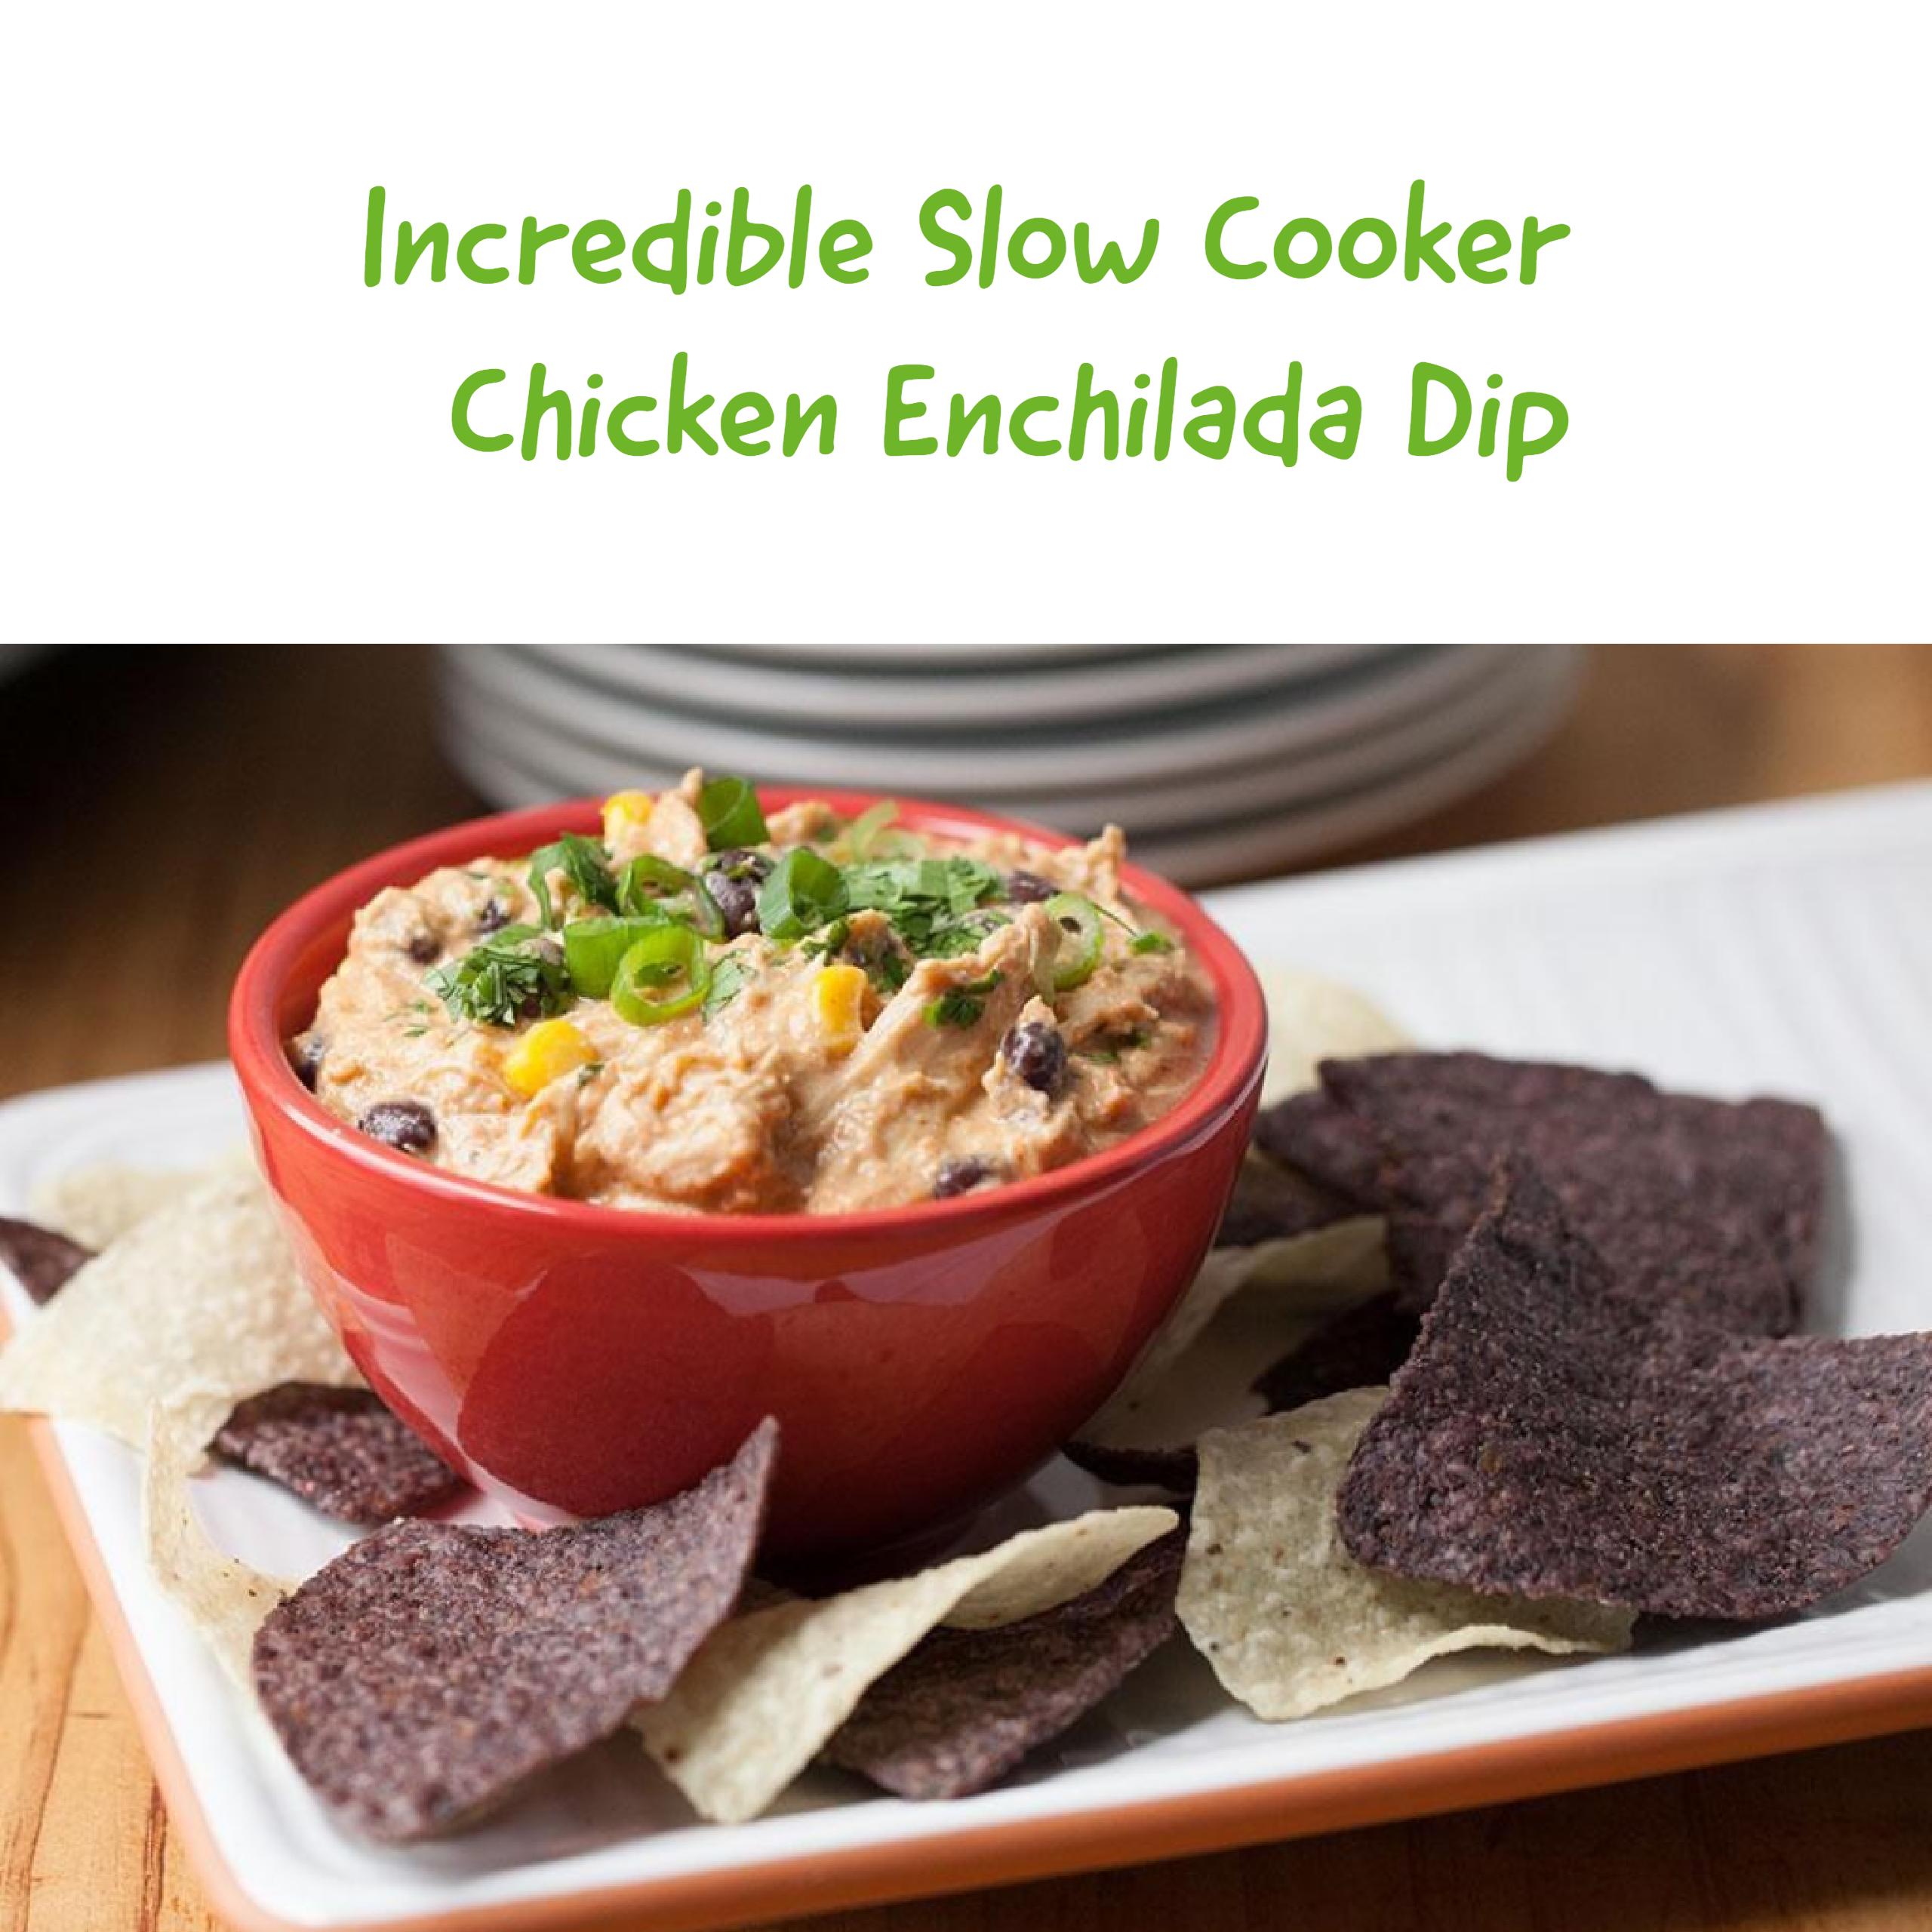 Incredible Slow Cooker Chicken Enchilada Dip